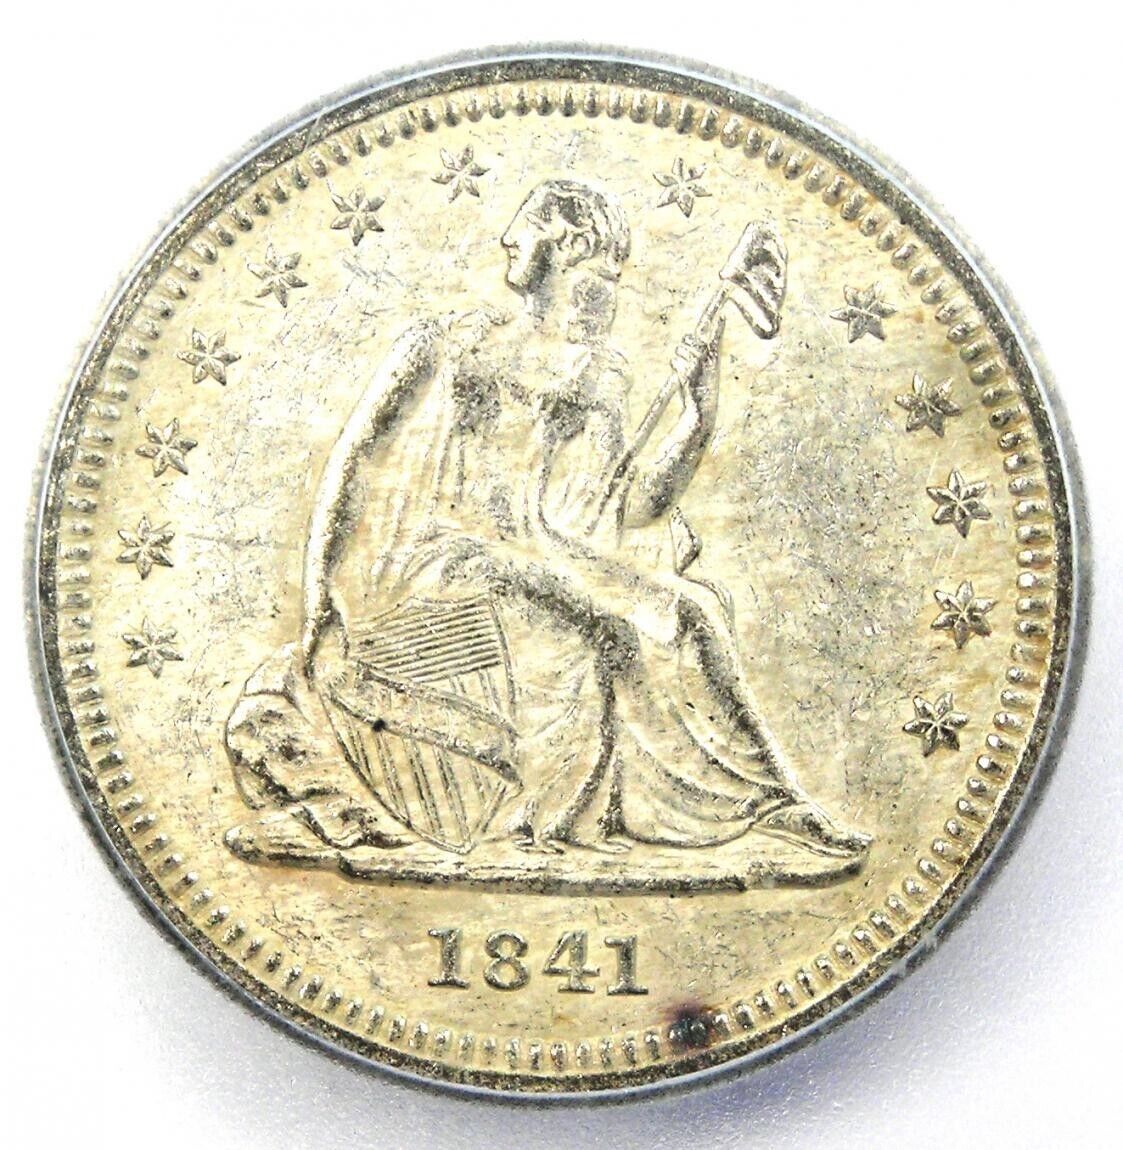 1841-O Seated Liberty Quarter 25C - Certified ICG AU58 - Rare Date Coin